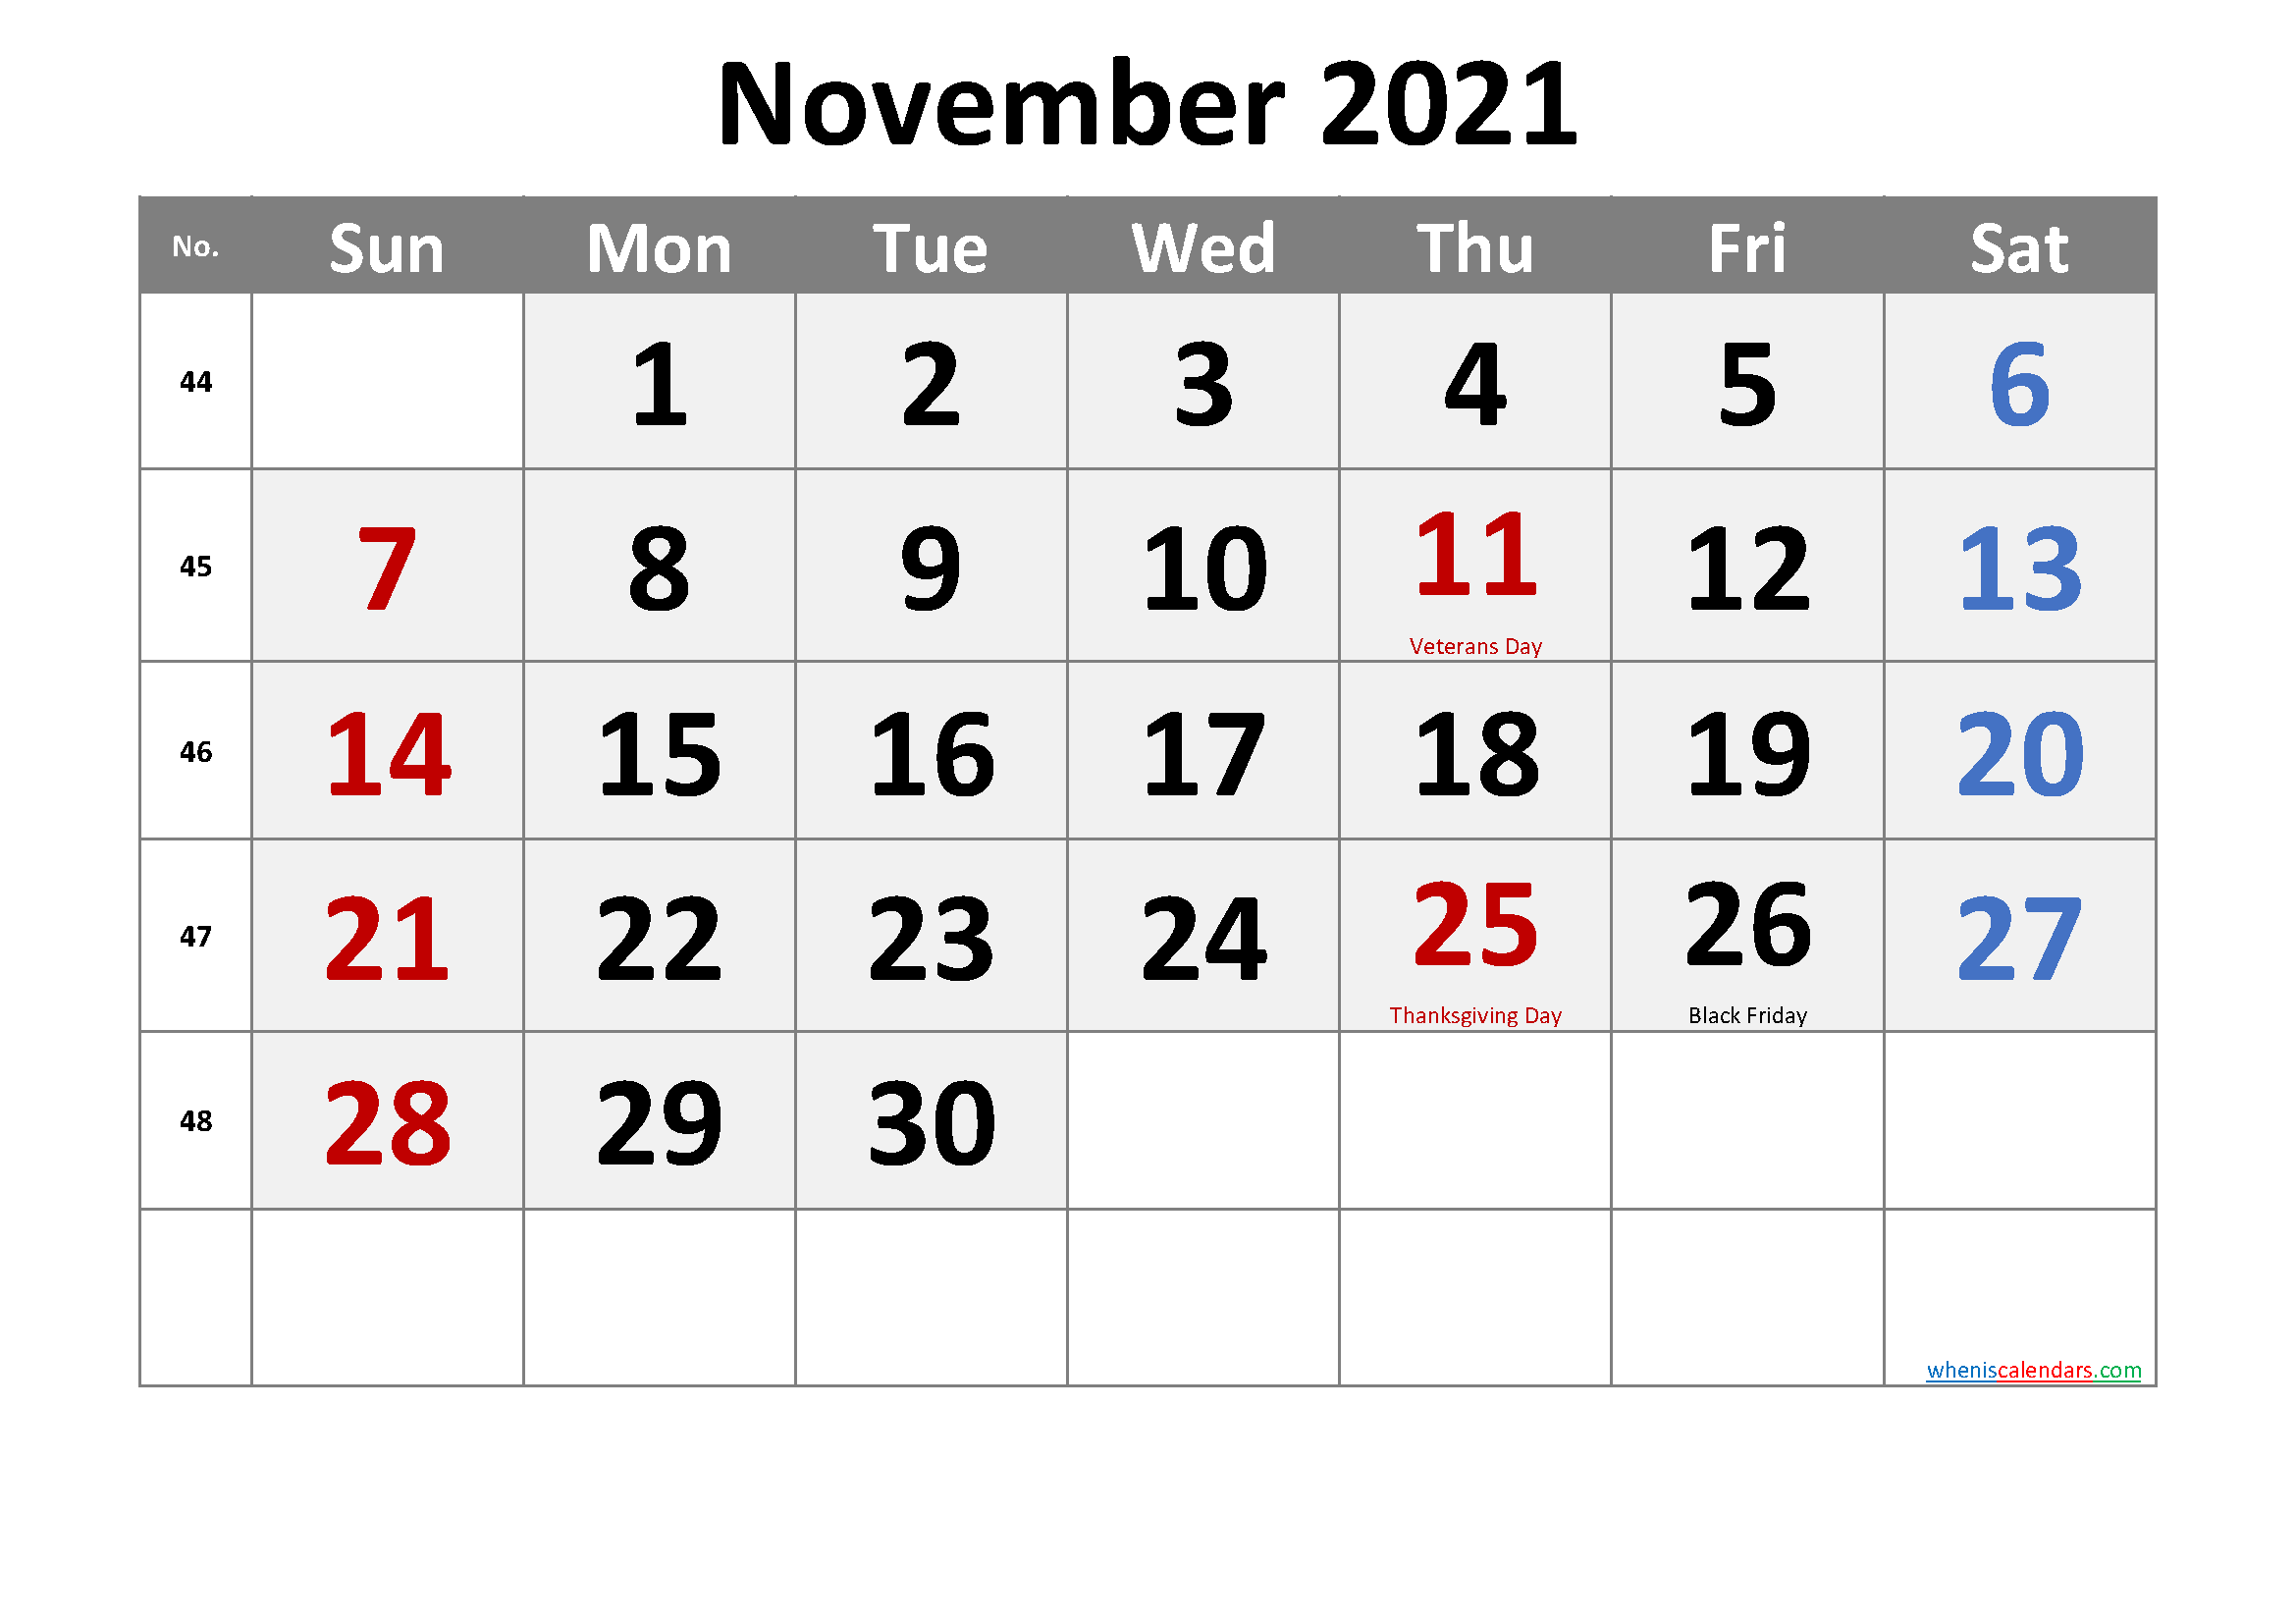 NOVEMBER 2021 Printable Calendar with Holidays